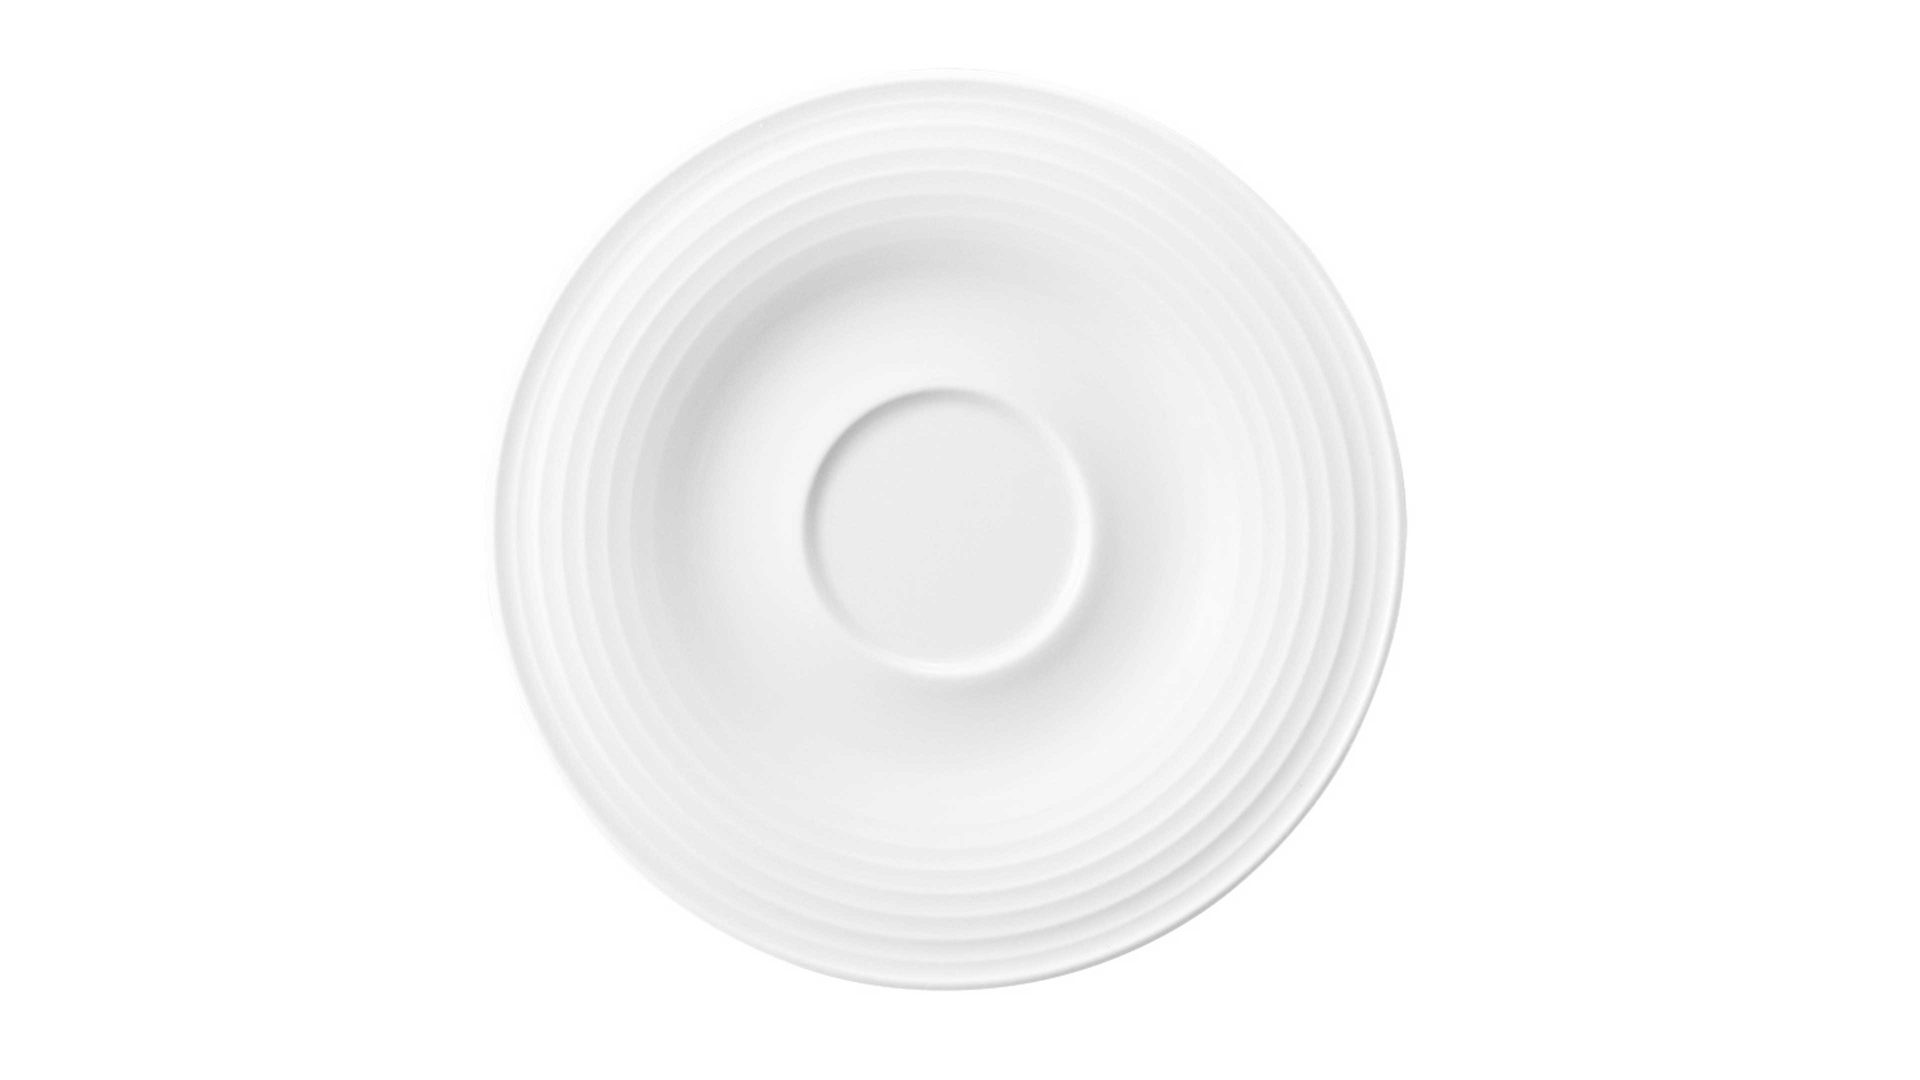 Unterteller Seltmann aus Porzellan in Weiß Seltmann Geschirrserie Beat 3 – Kombi-Unterteller weißes Porzellan – Durchmesser ca. 14 cm